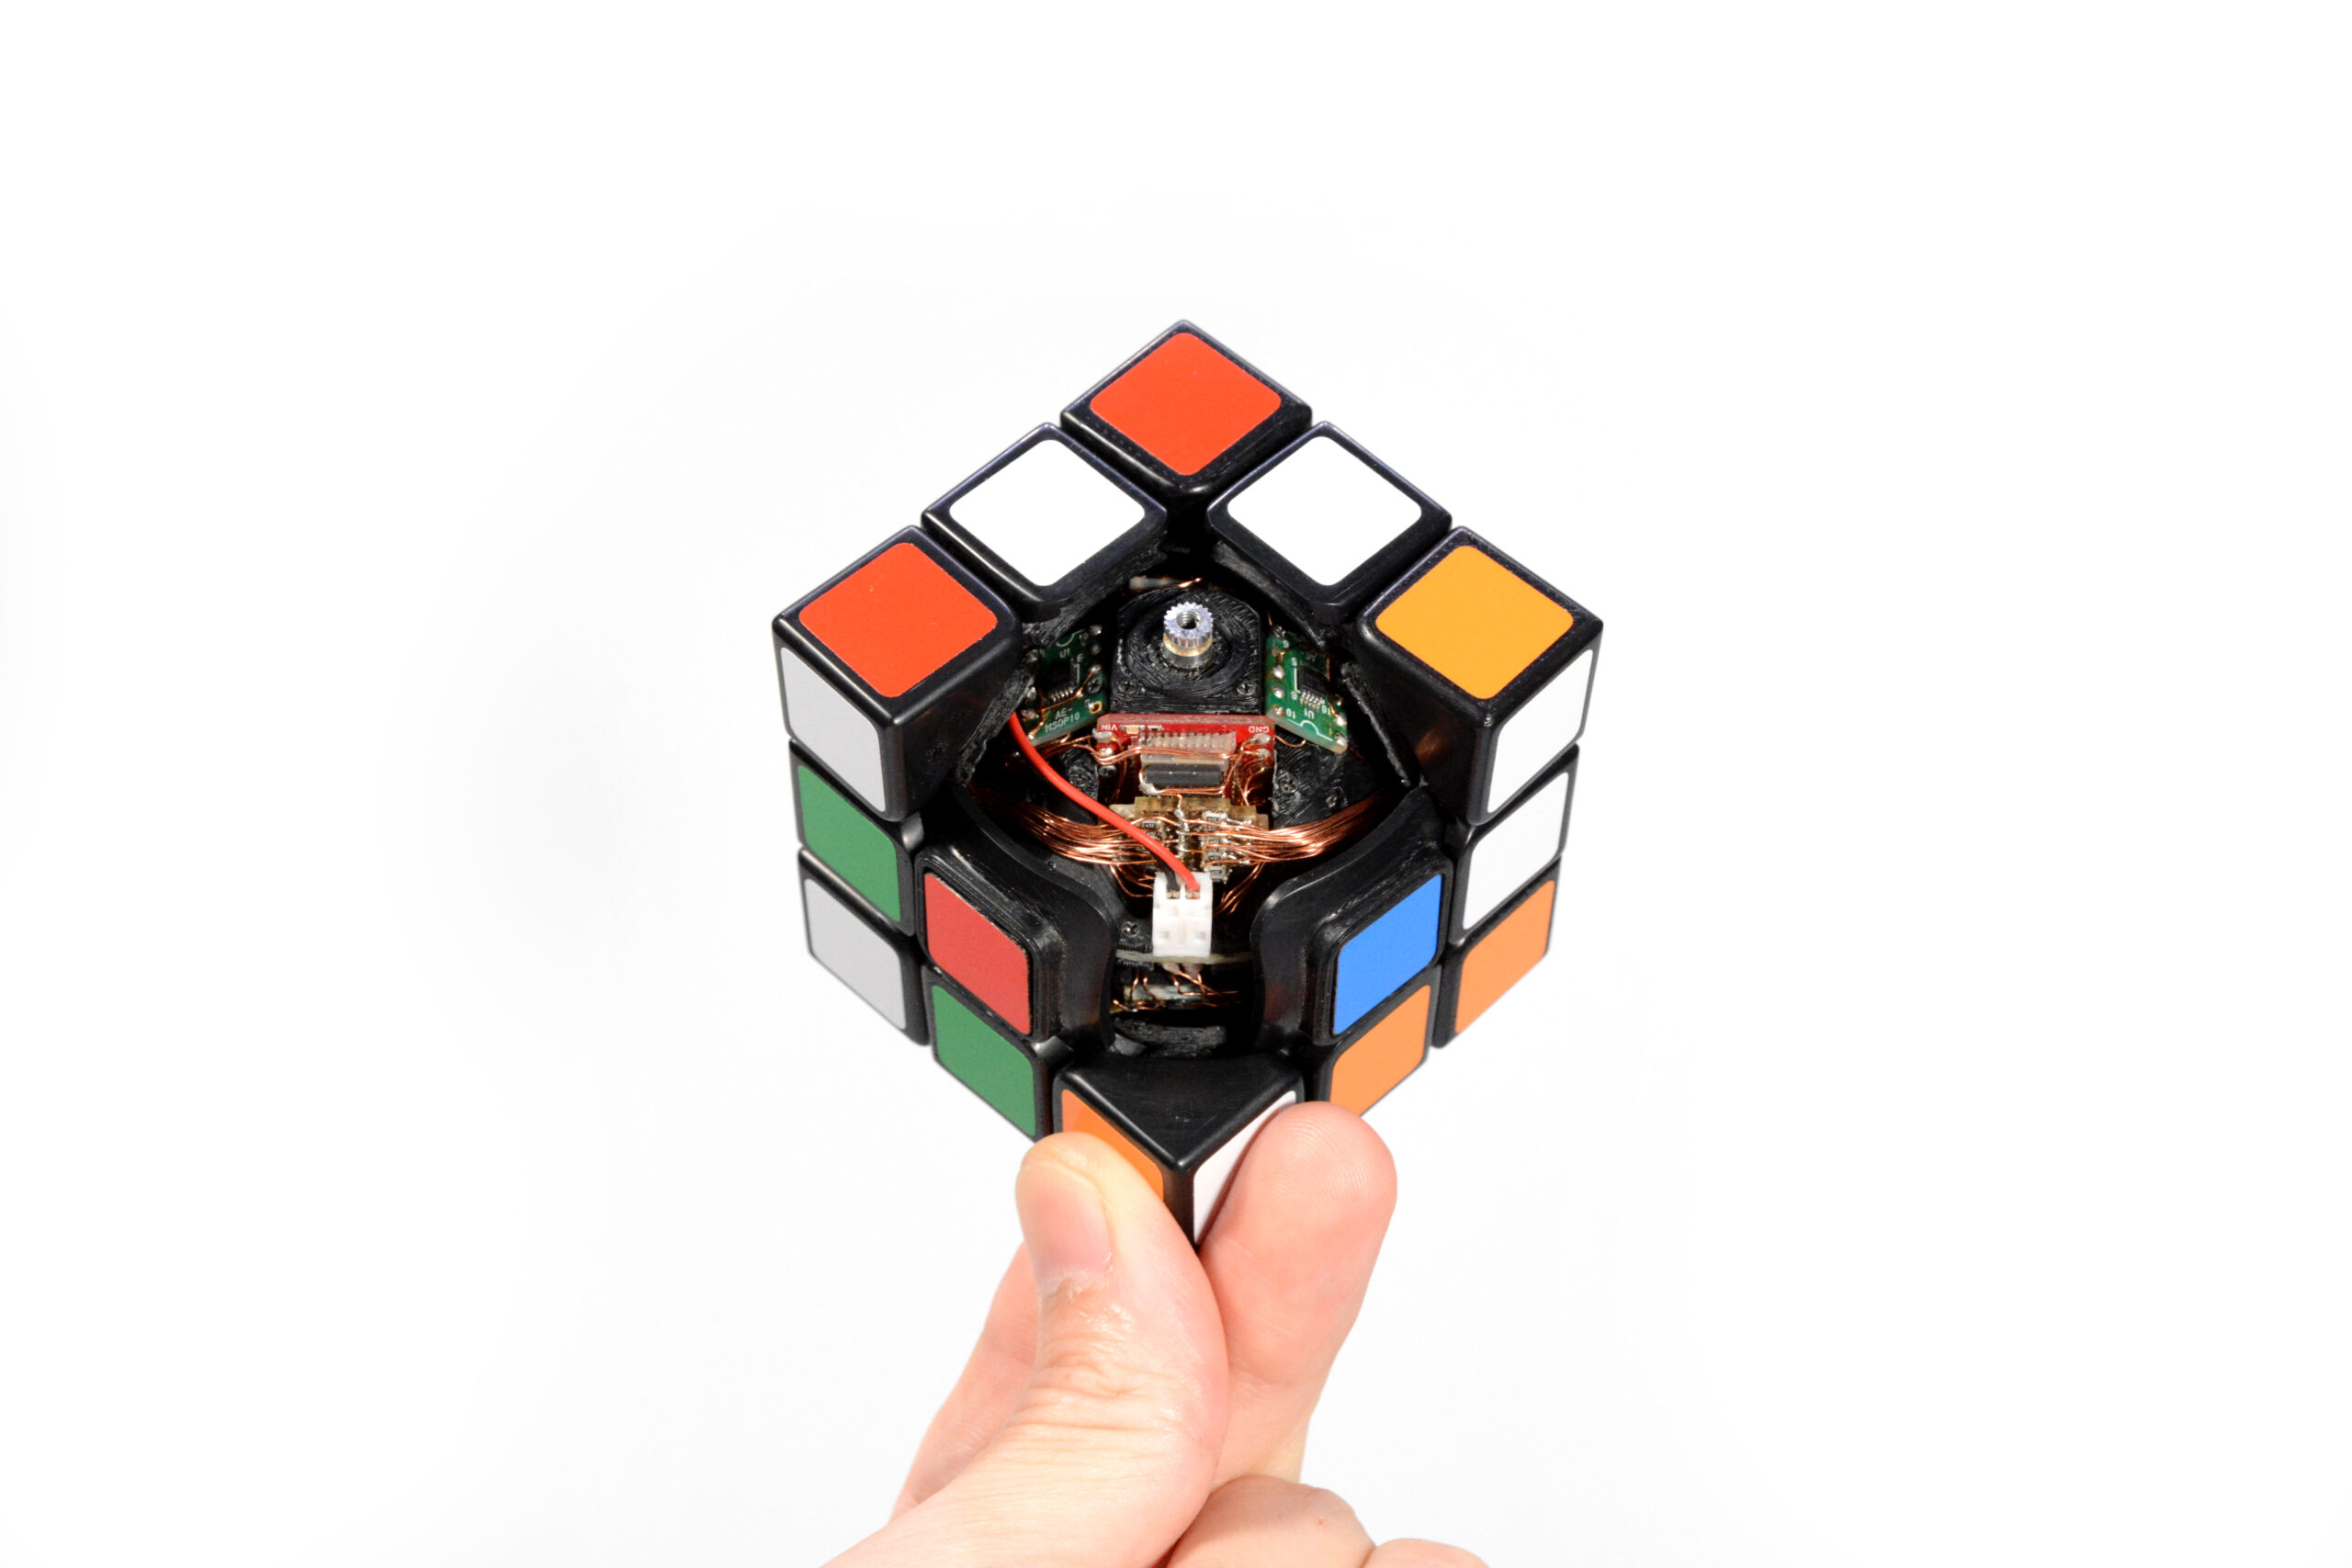 Smart3: The Self-Solving Rubik's Cube - Make